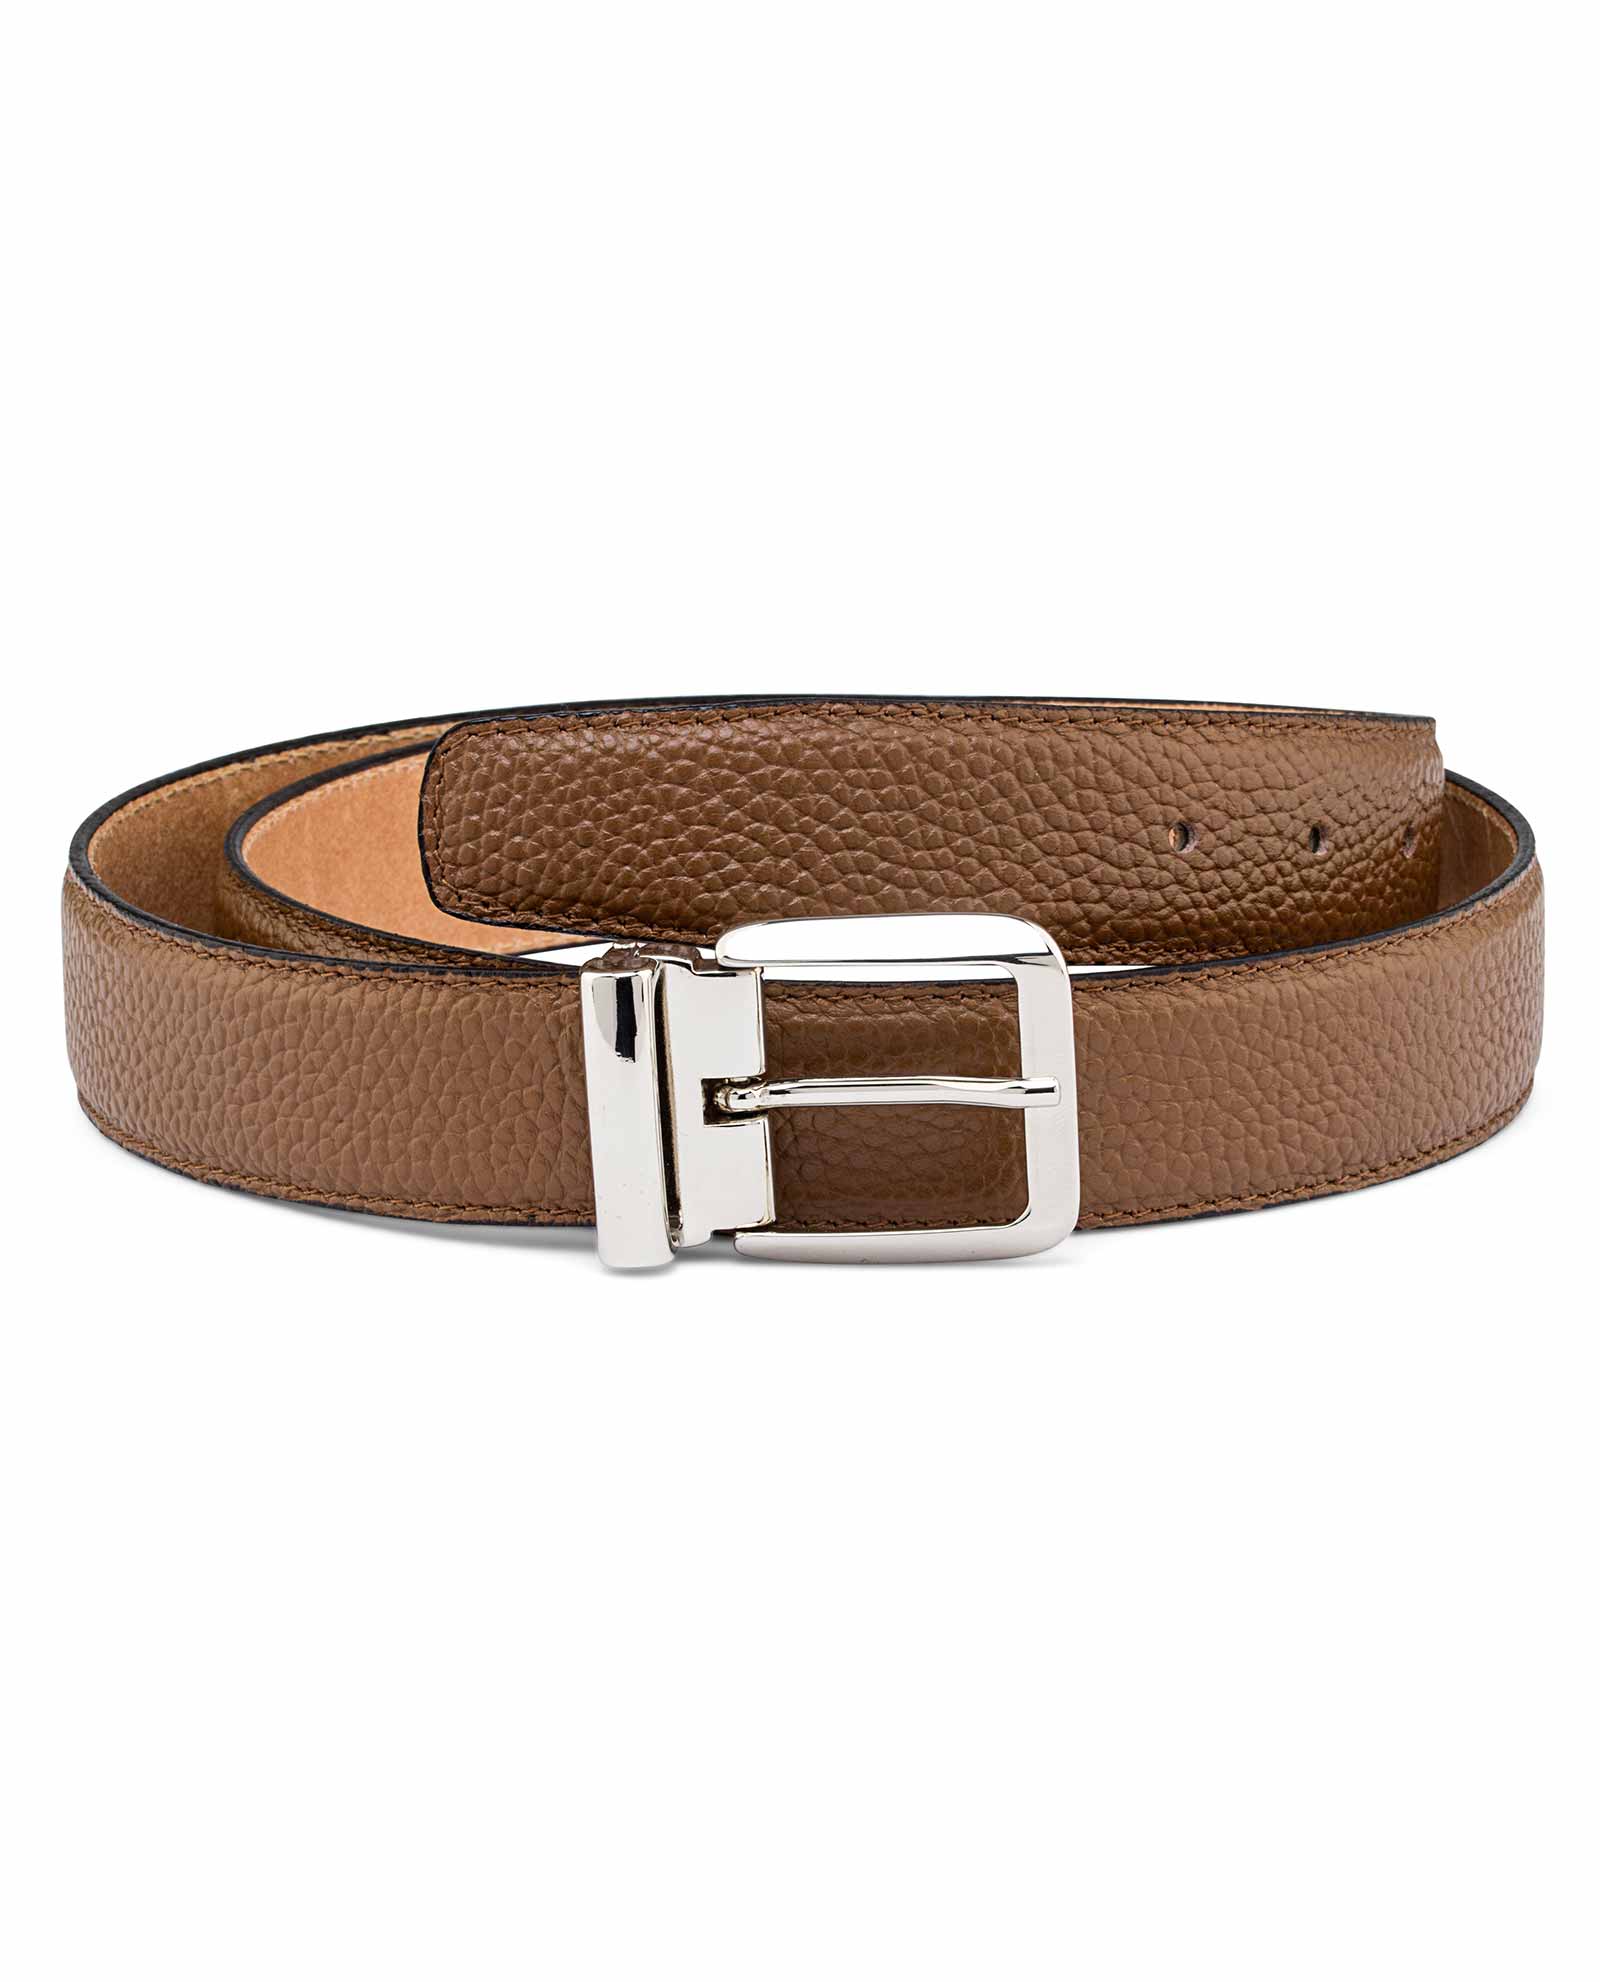 Buy Mens Tan Leather Belt | LeatherBeltsOnline.com | Free Shipping